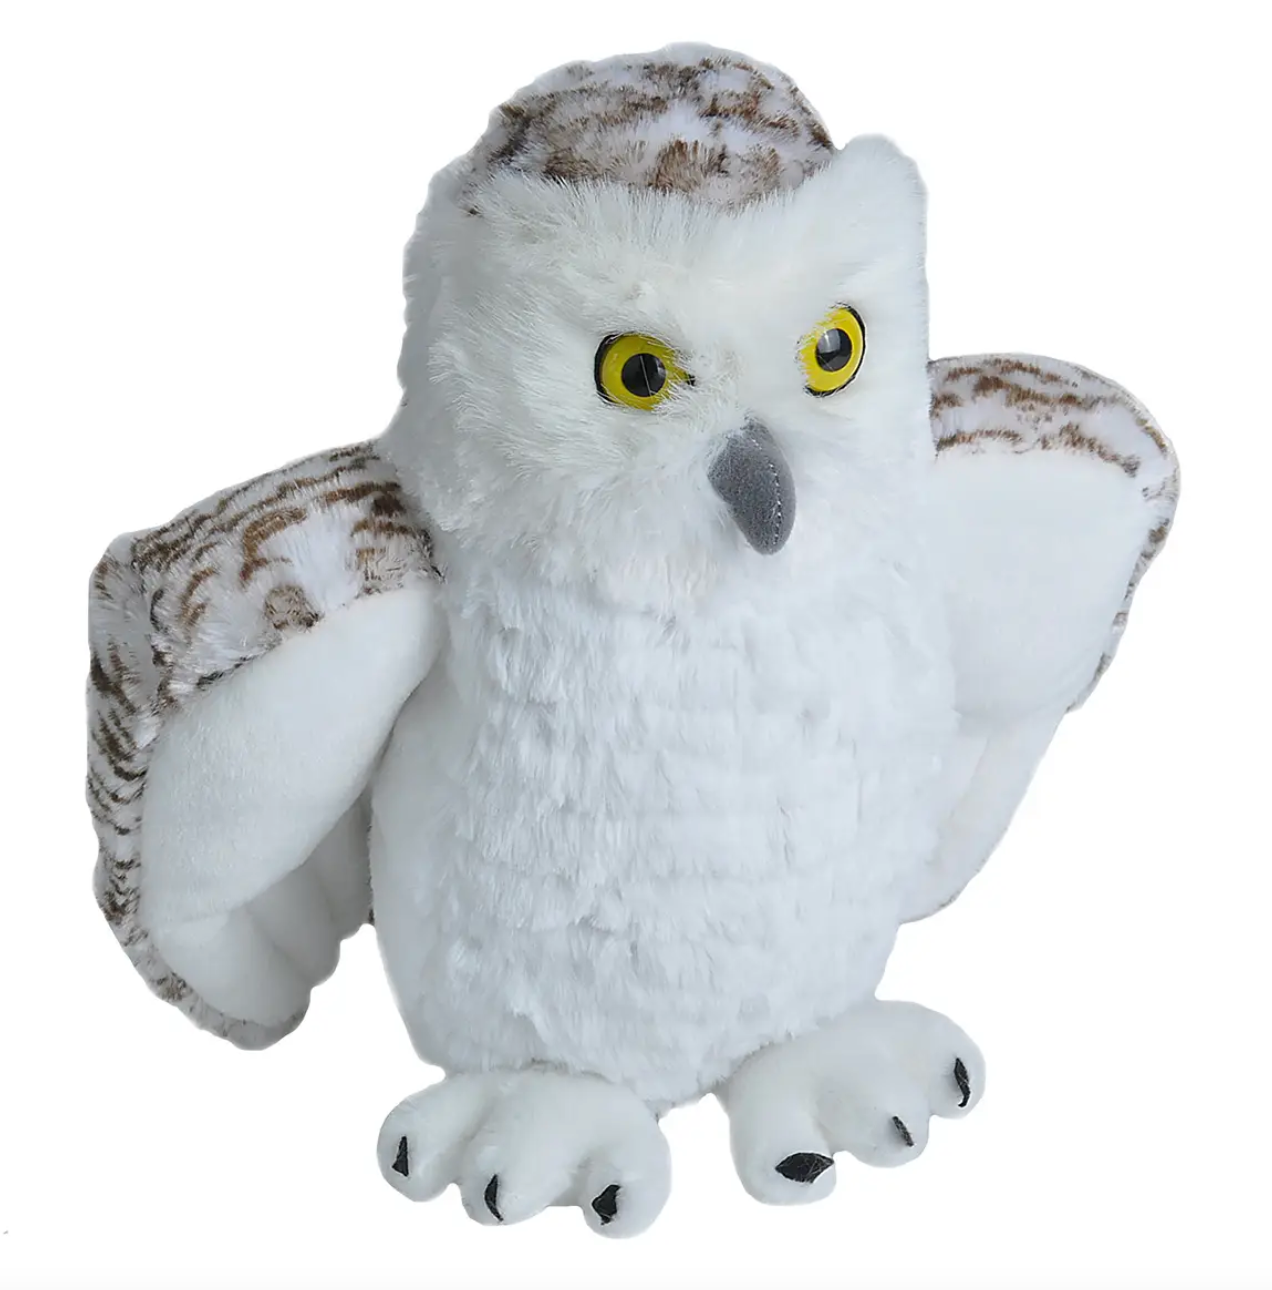 Snowy Owl Stuffed Animal - 12"